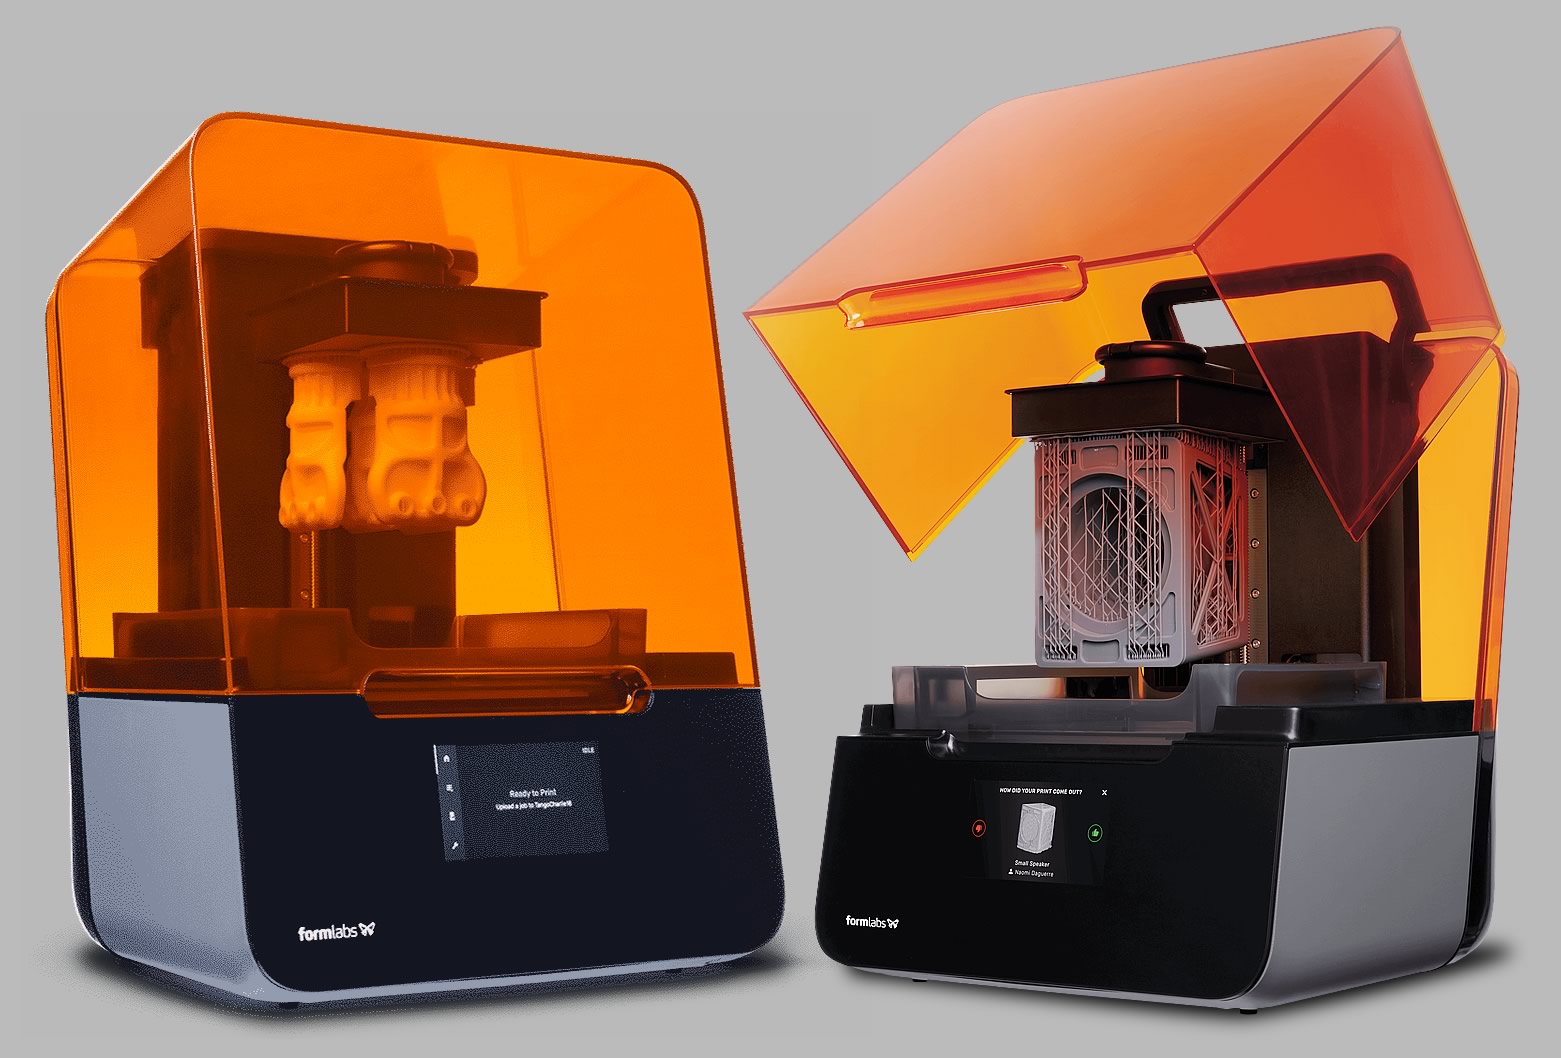 Form 3 Plus - Formlabs Impressora SLA 3D